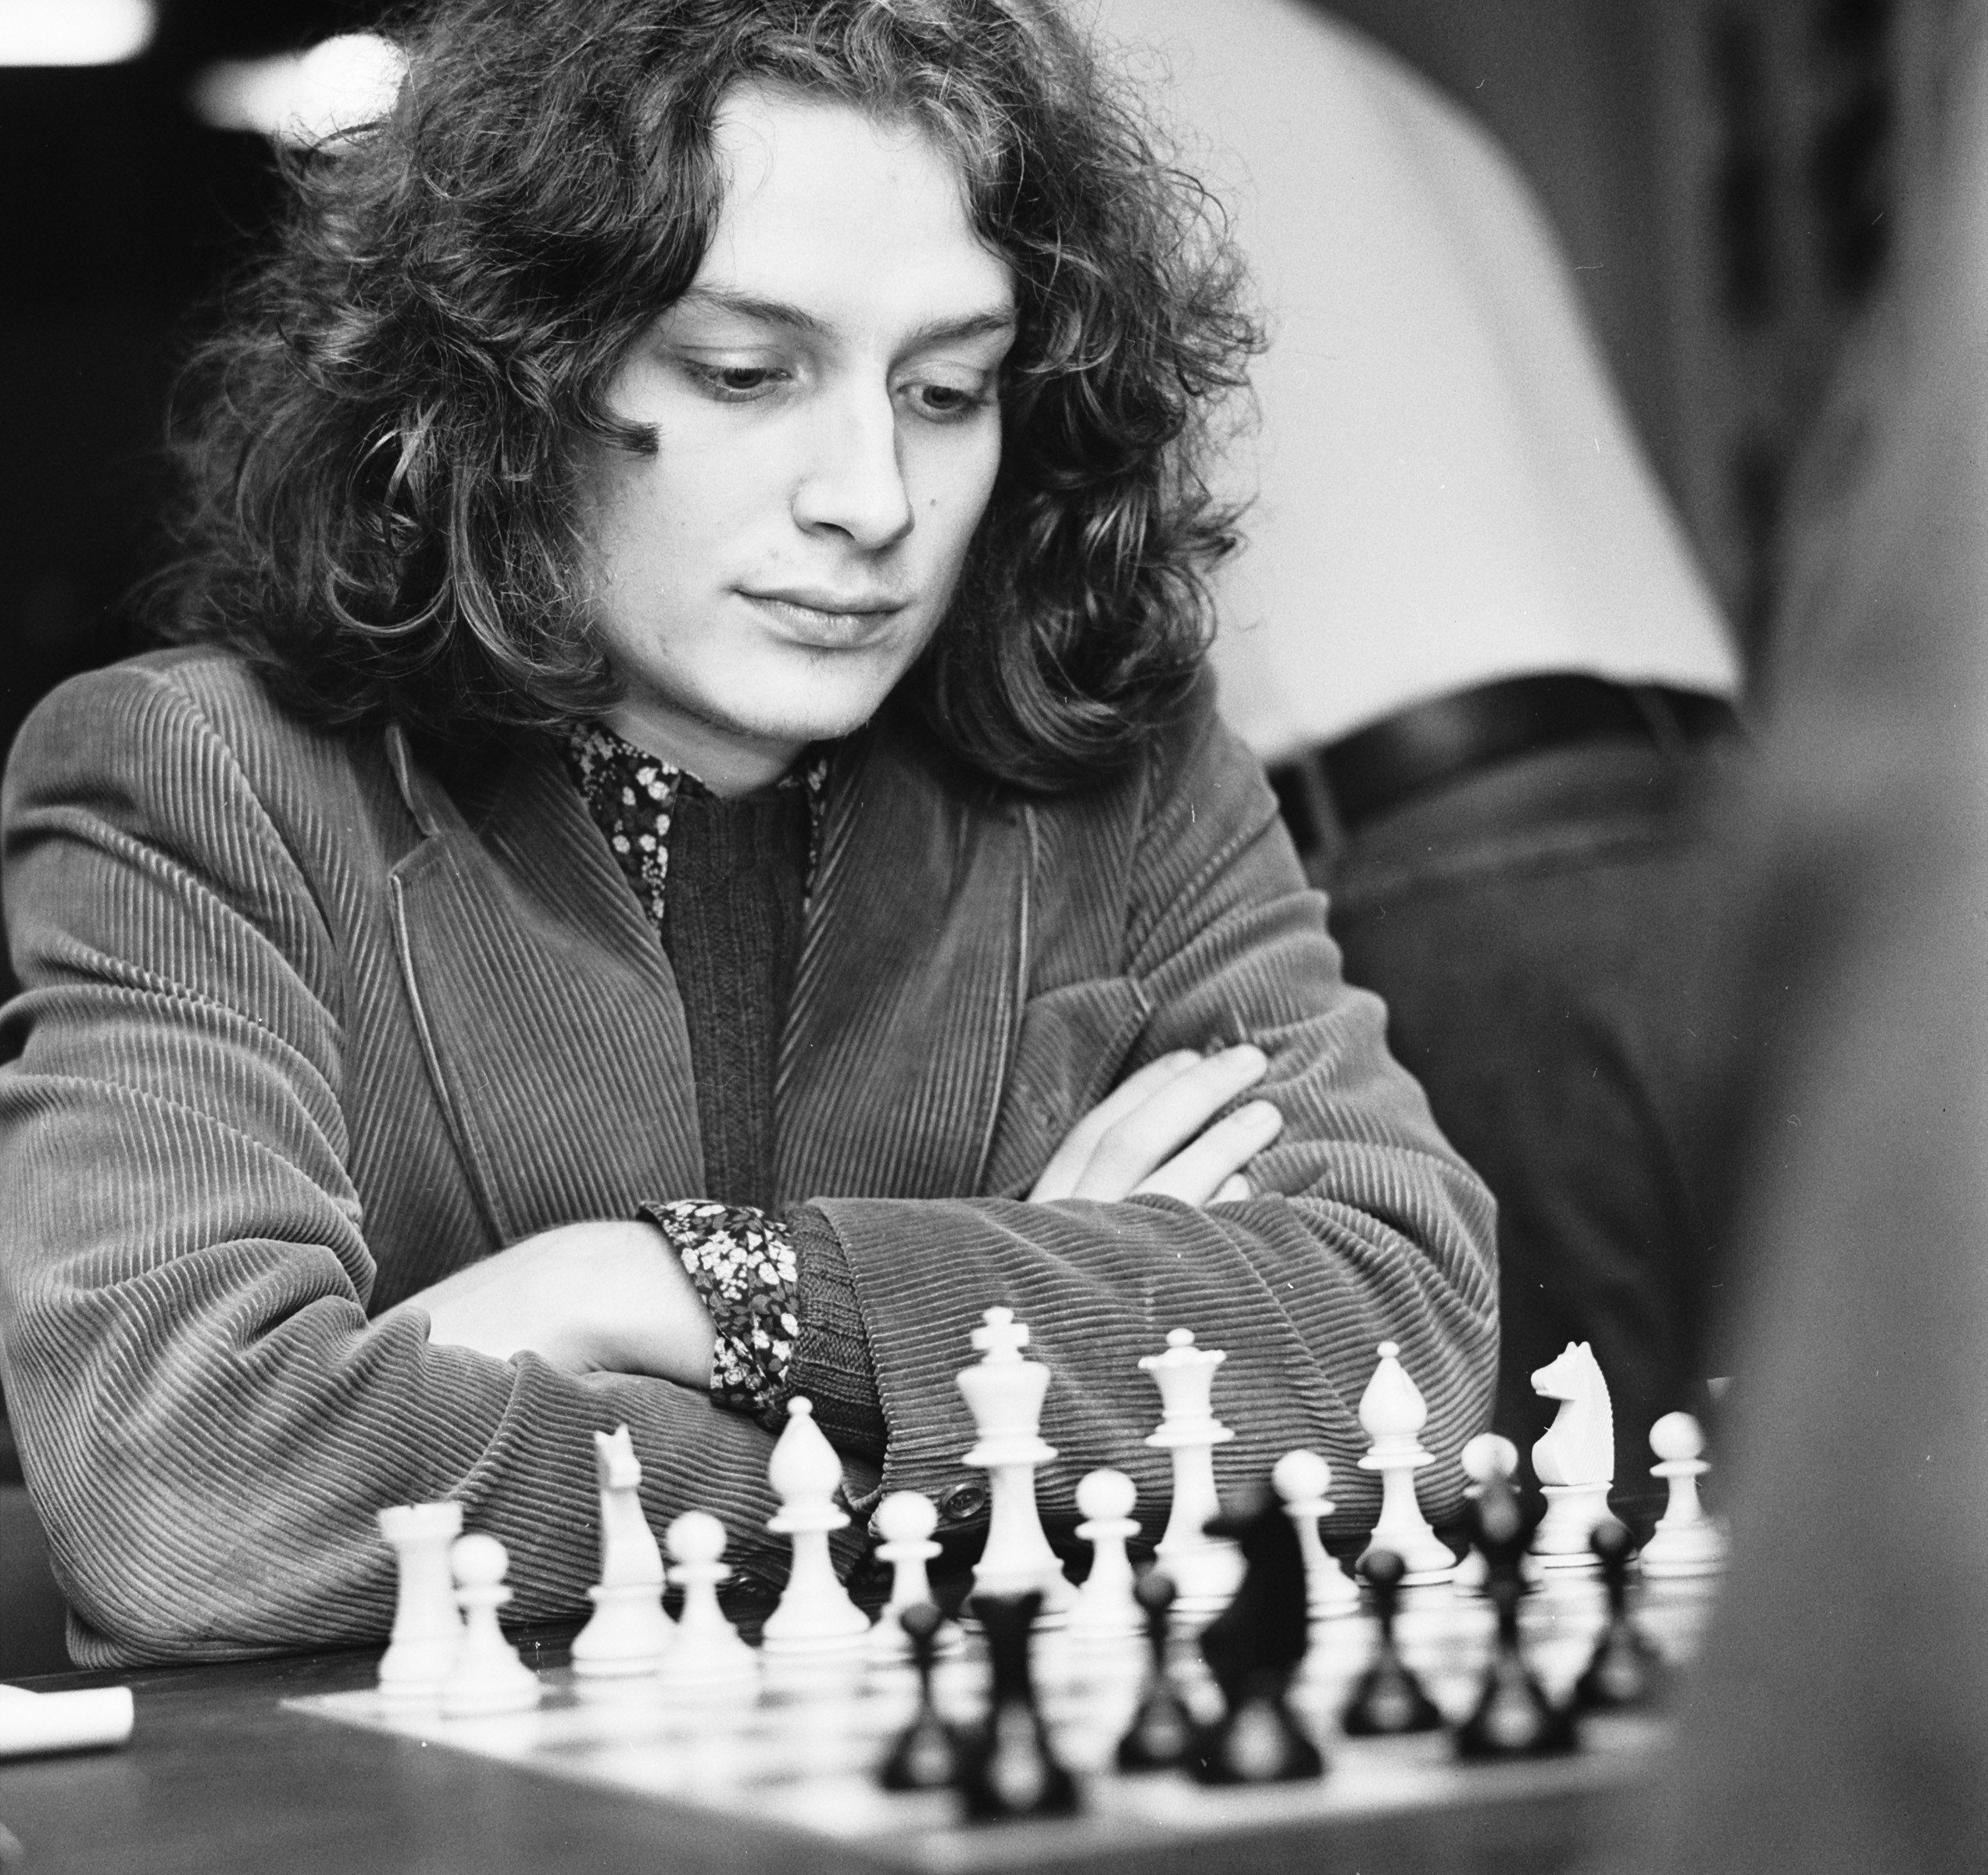 Chess: Bobby Fischer v Boris Spassky 1972 remembered at Reykjavik Open, Chess